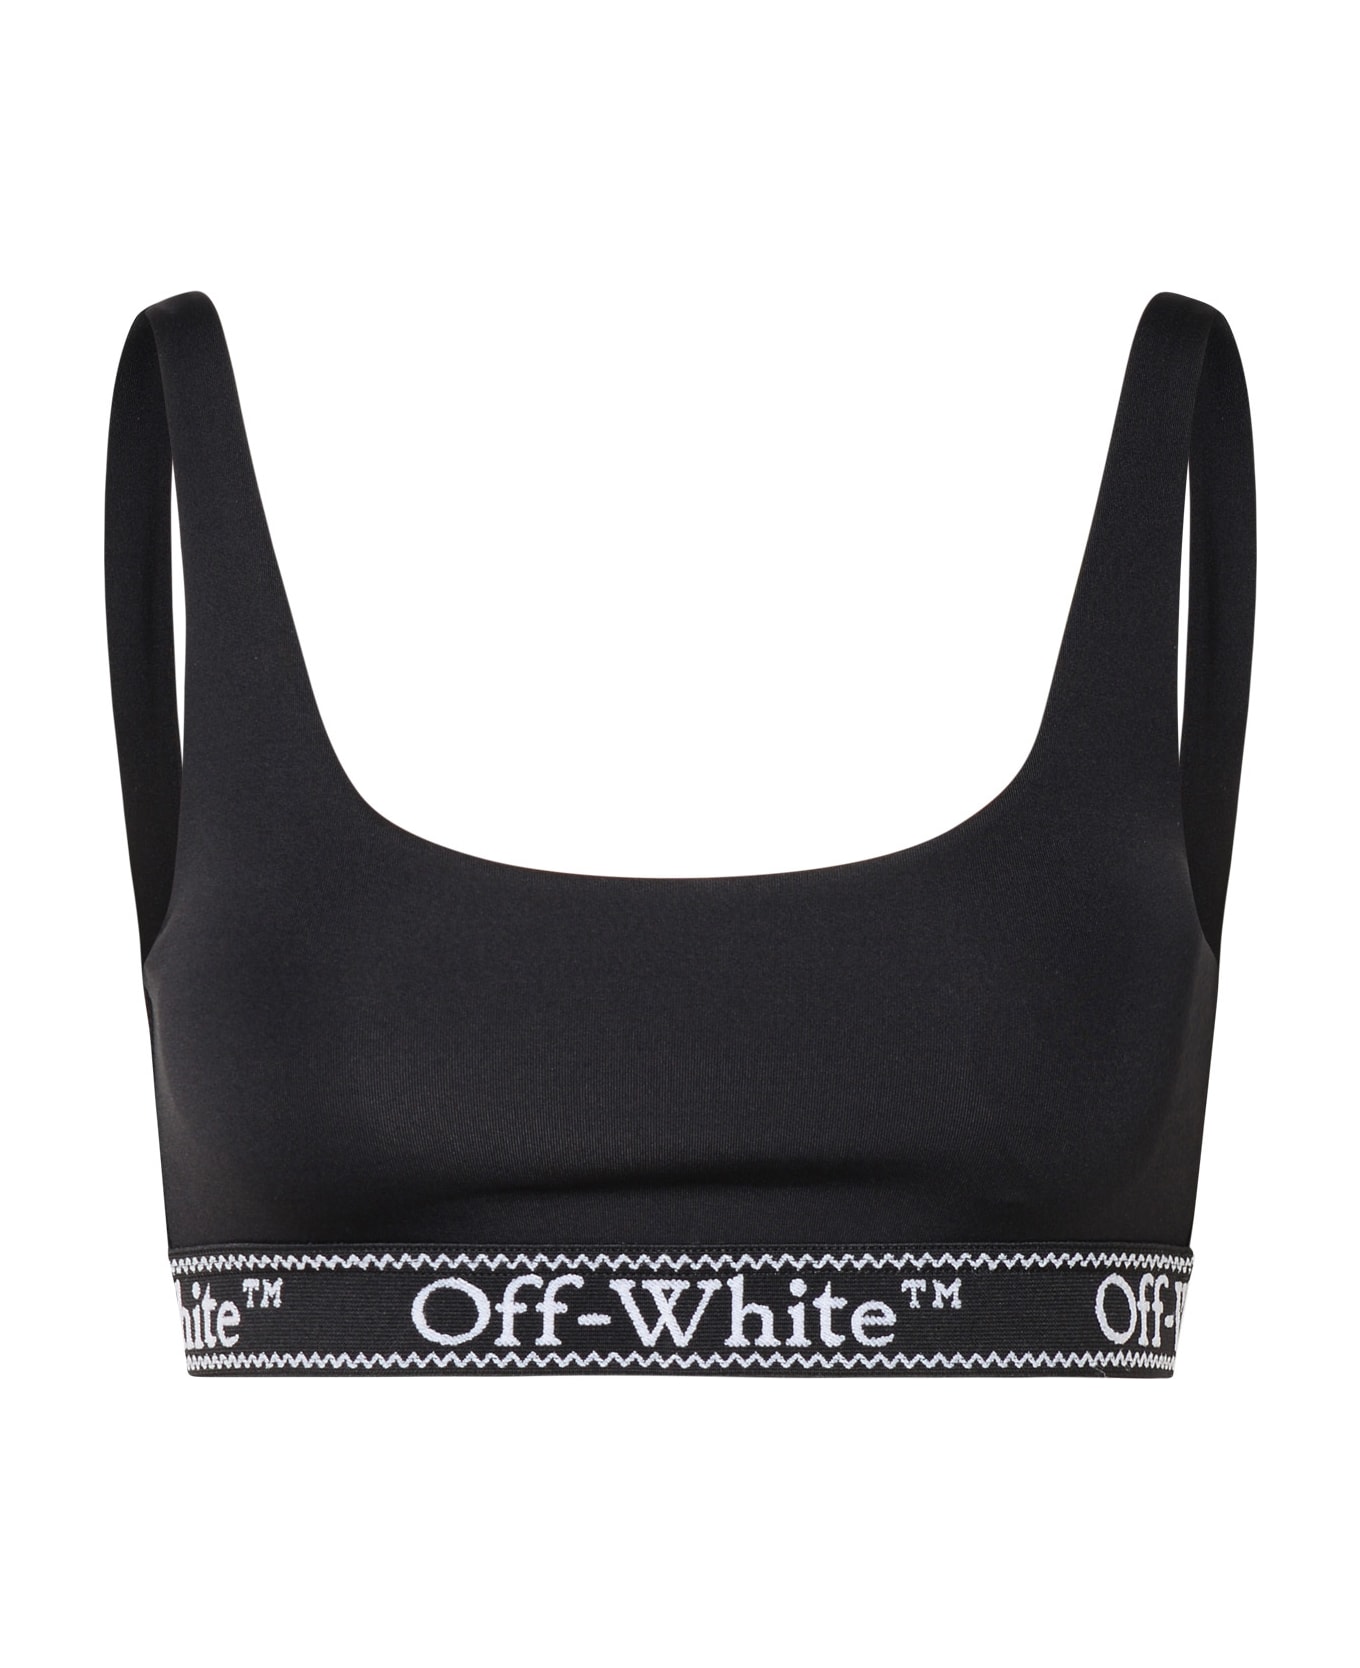 Off-White Sporty Top In Black Nylon Blend - Black White